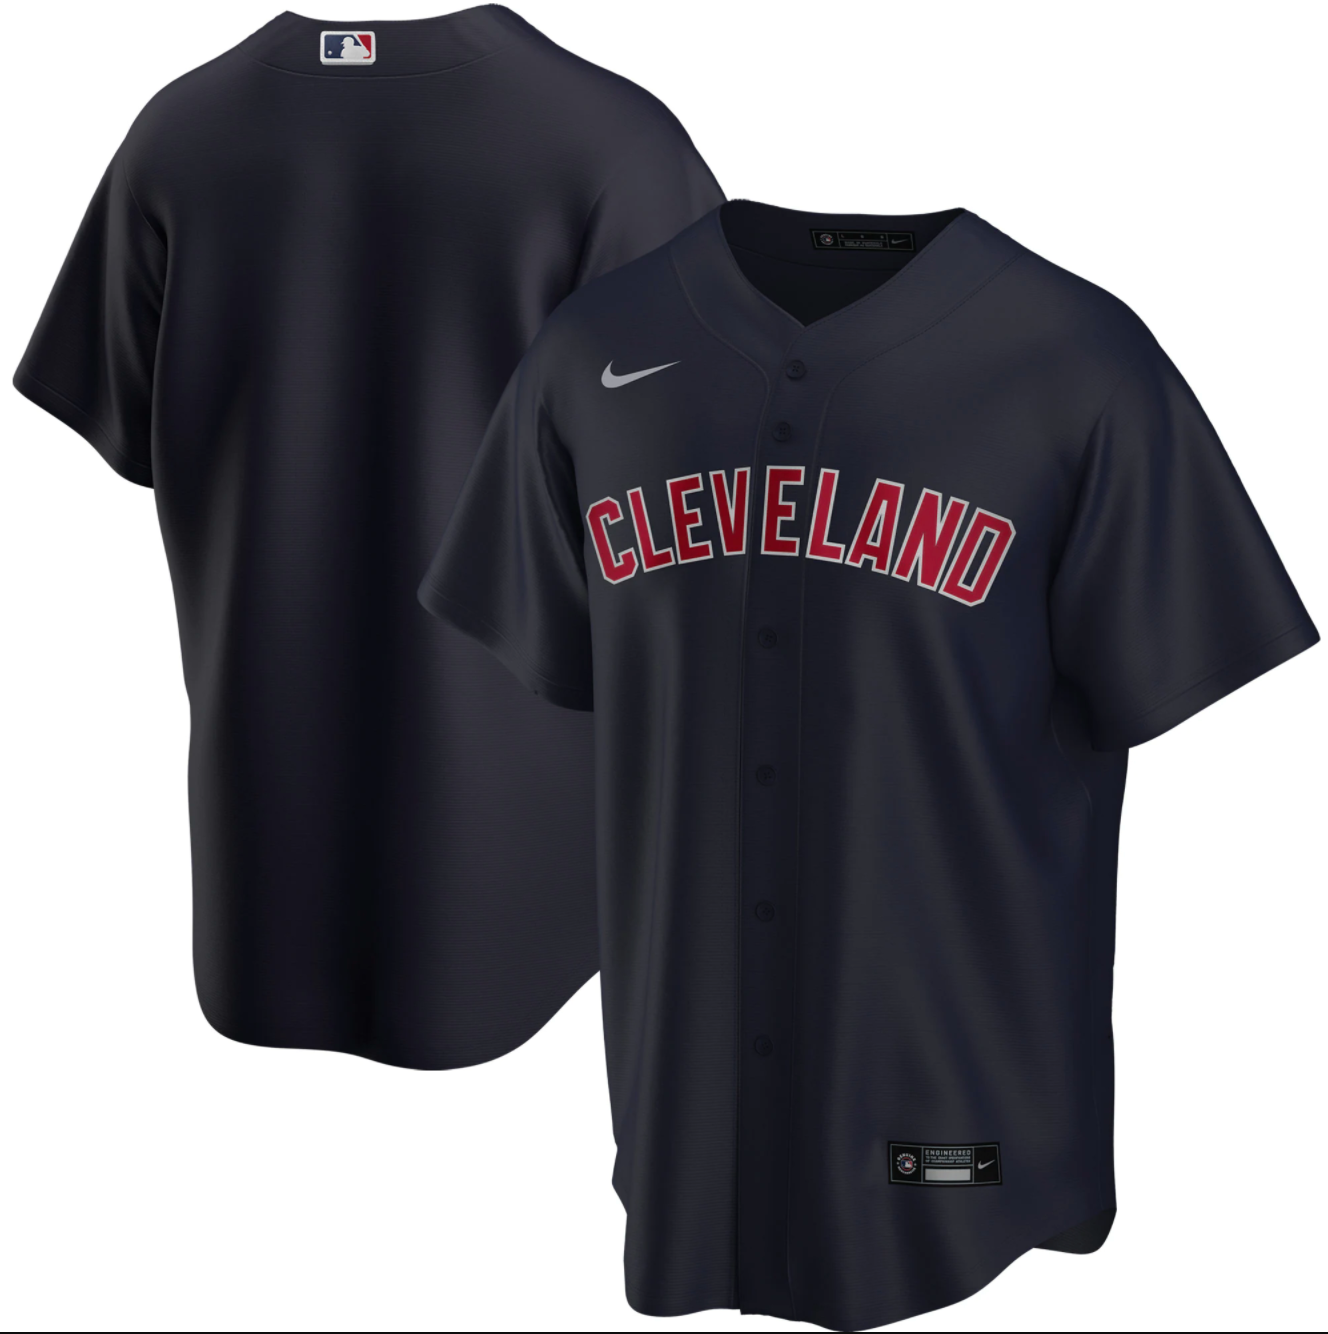 Essential Cleveland Indians fan gear: Shirts, hats, masks & more